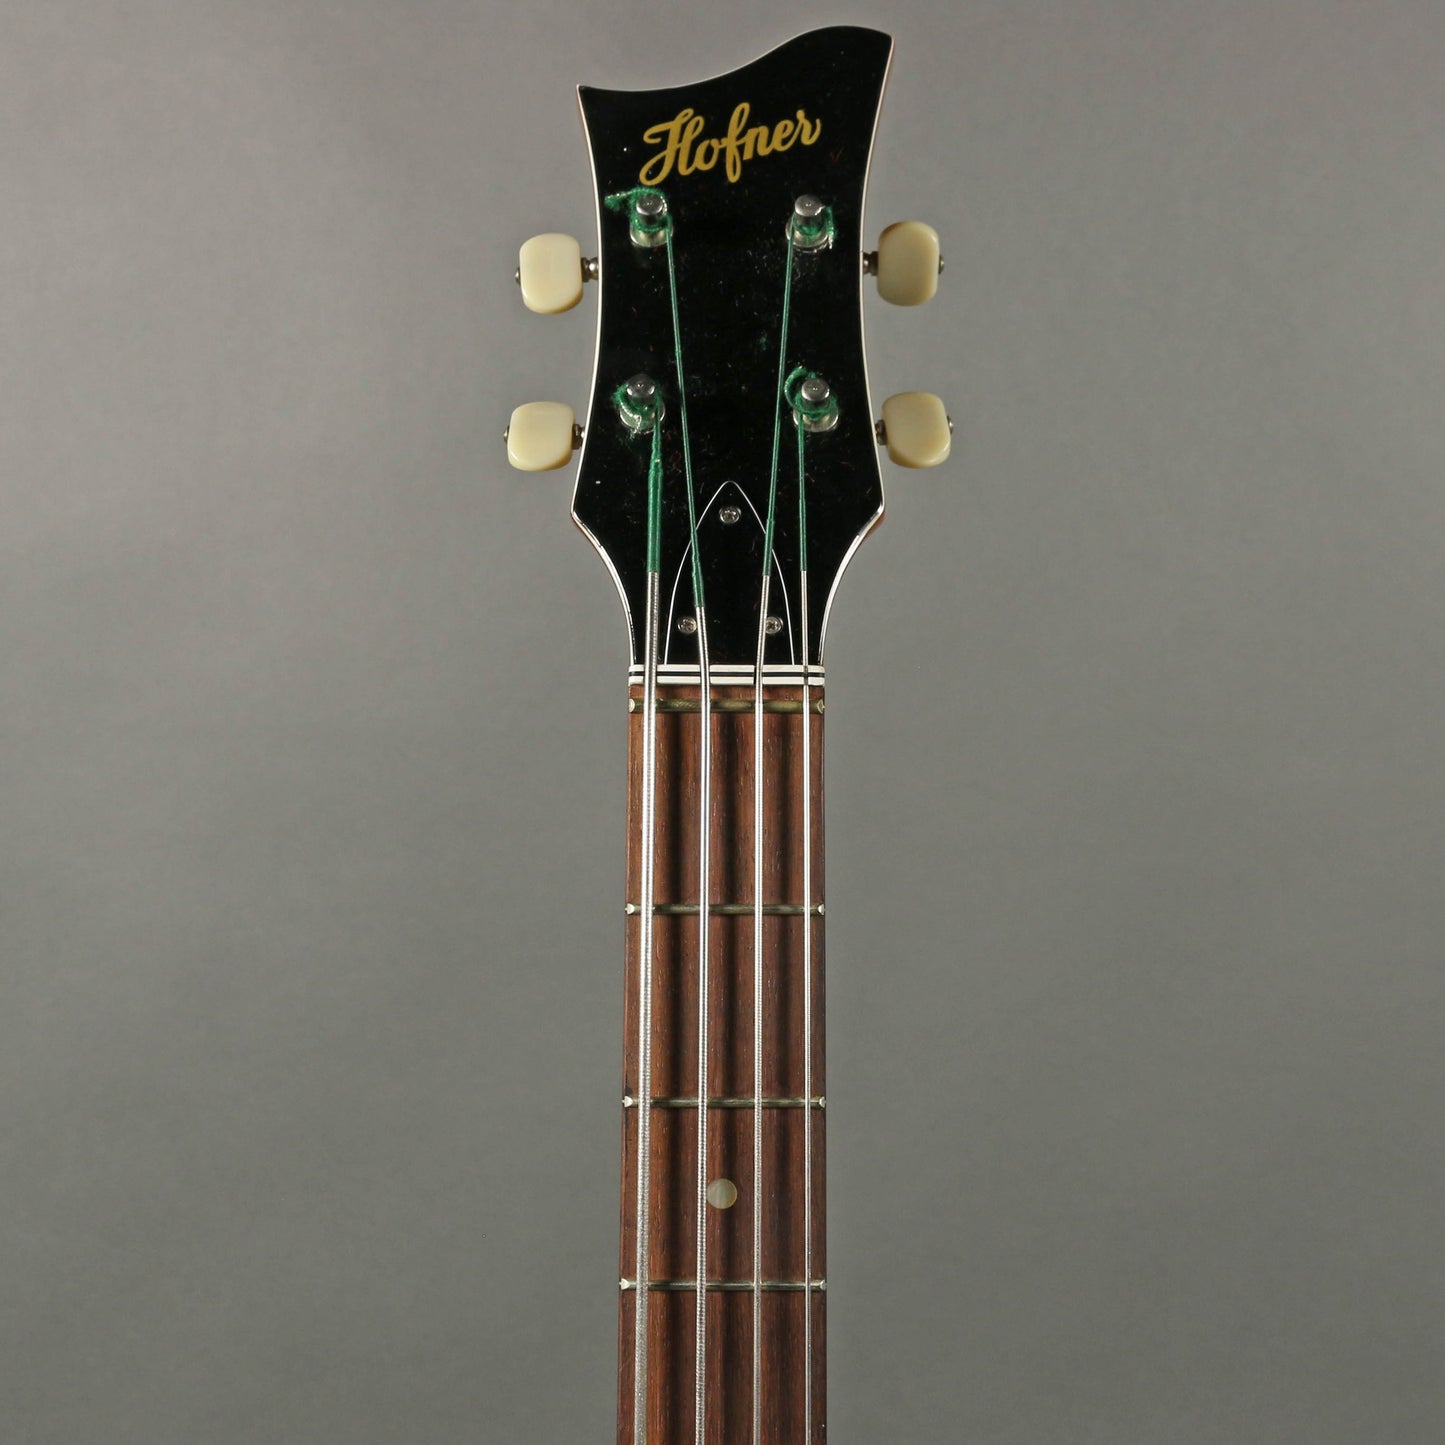 2009 Hofner 500/1 Vintage '62 Bass